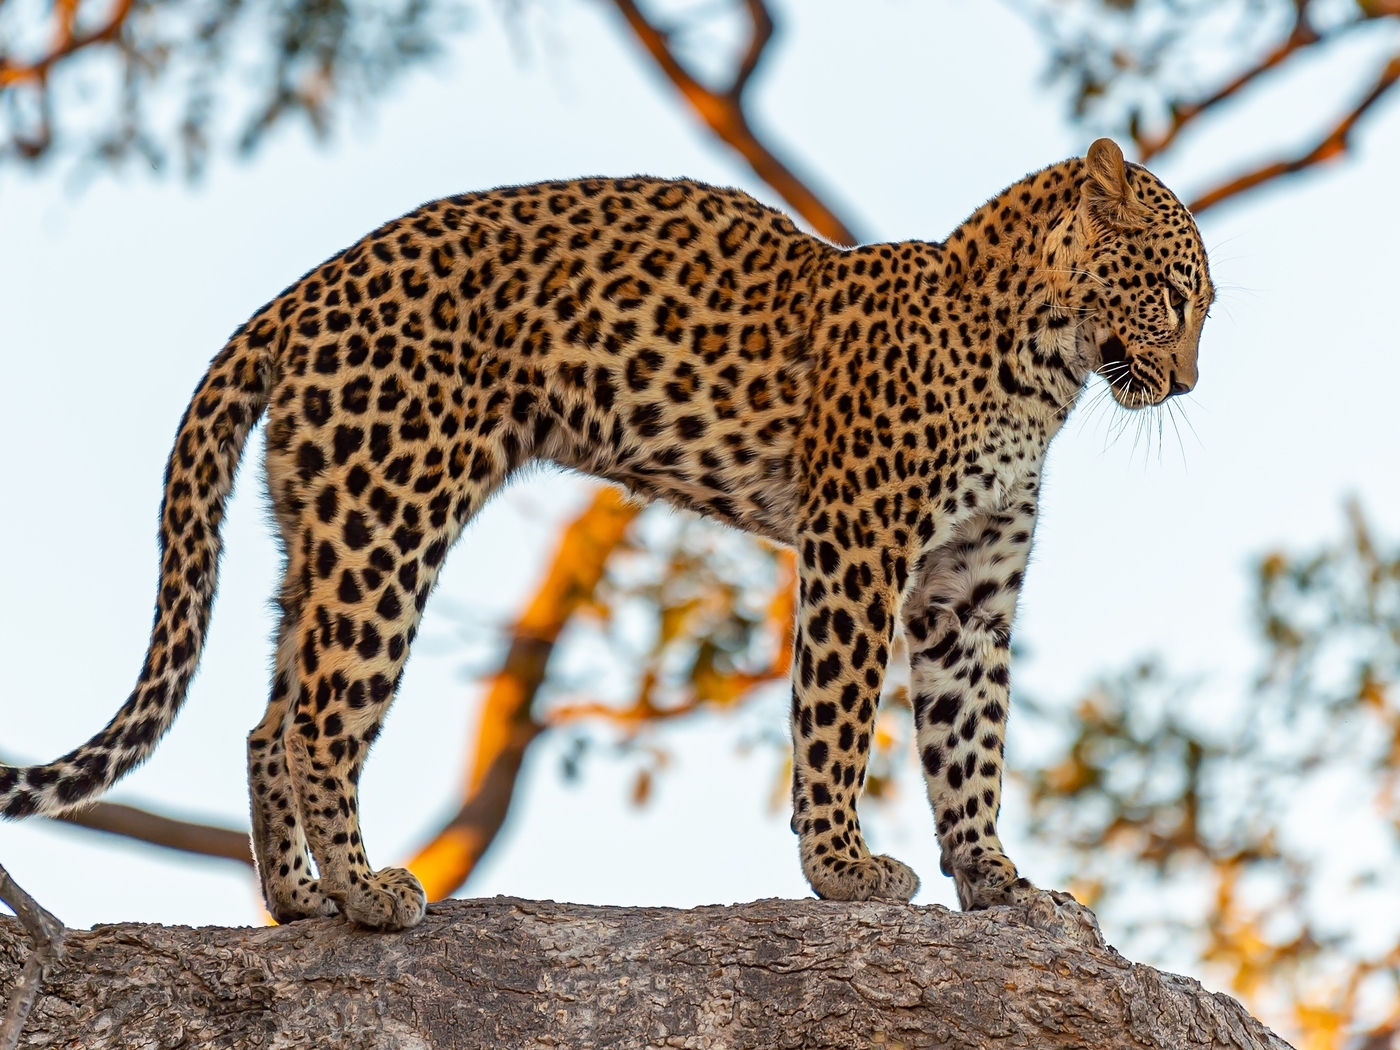 Image: Leopard, cat, predator, tree, trunk, stands, pose